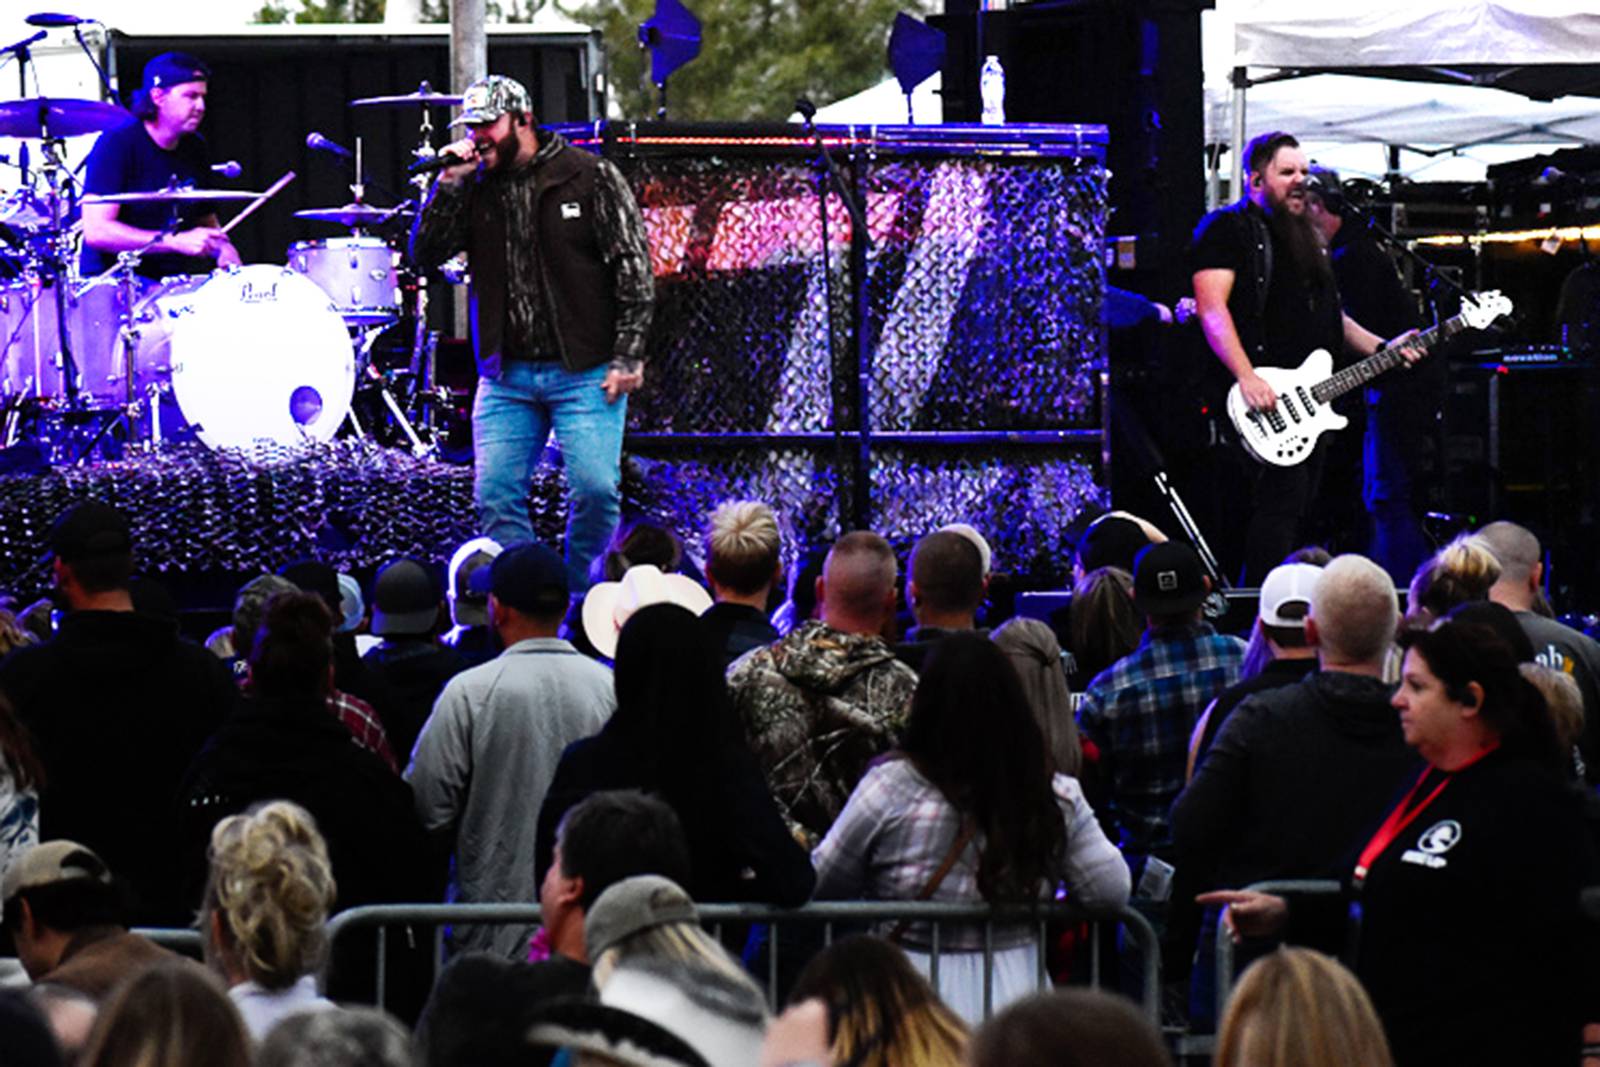 McHenry concerts raise more than 200,000 toward new splash pad Shaw